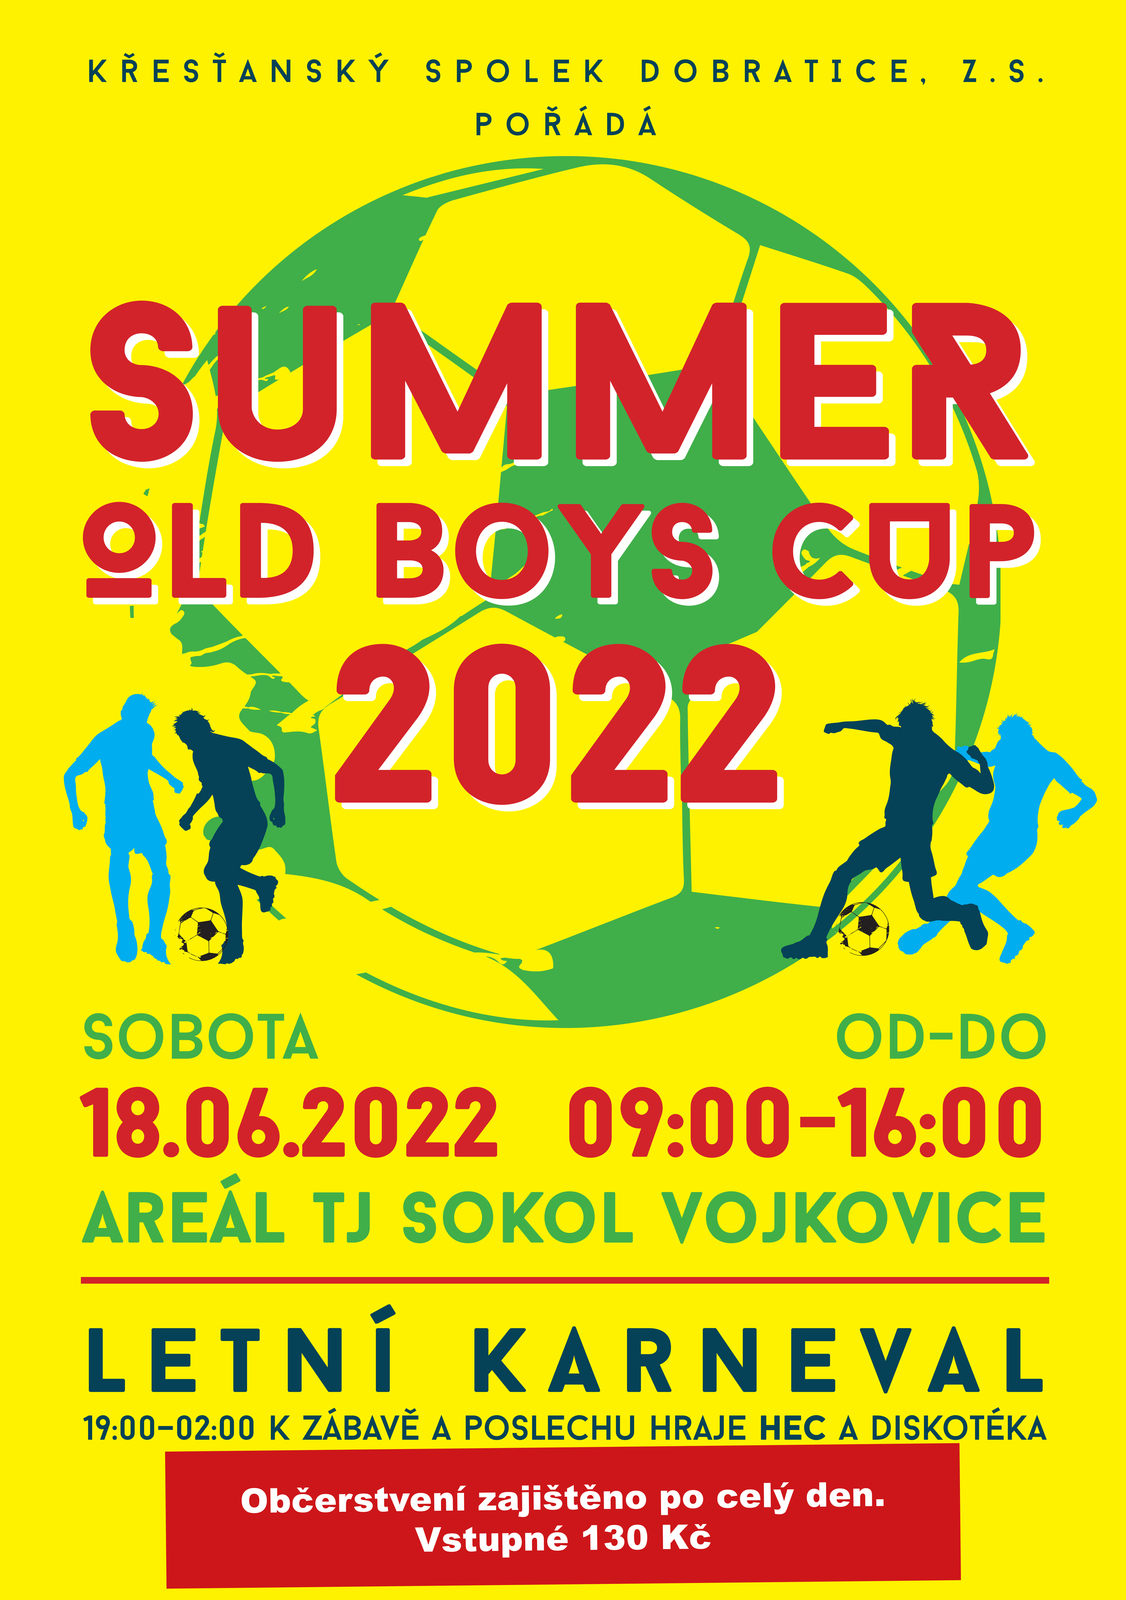 Old boys cup 2022.jpg